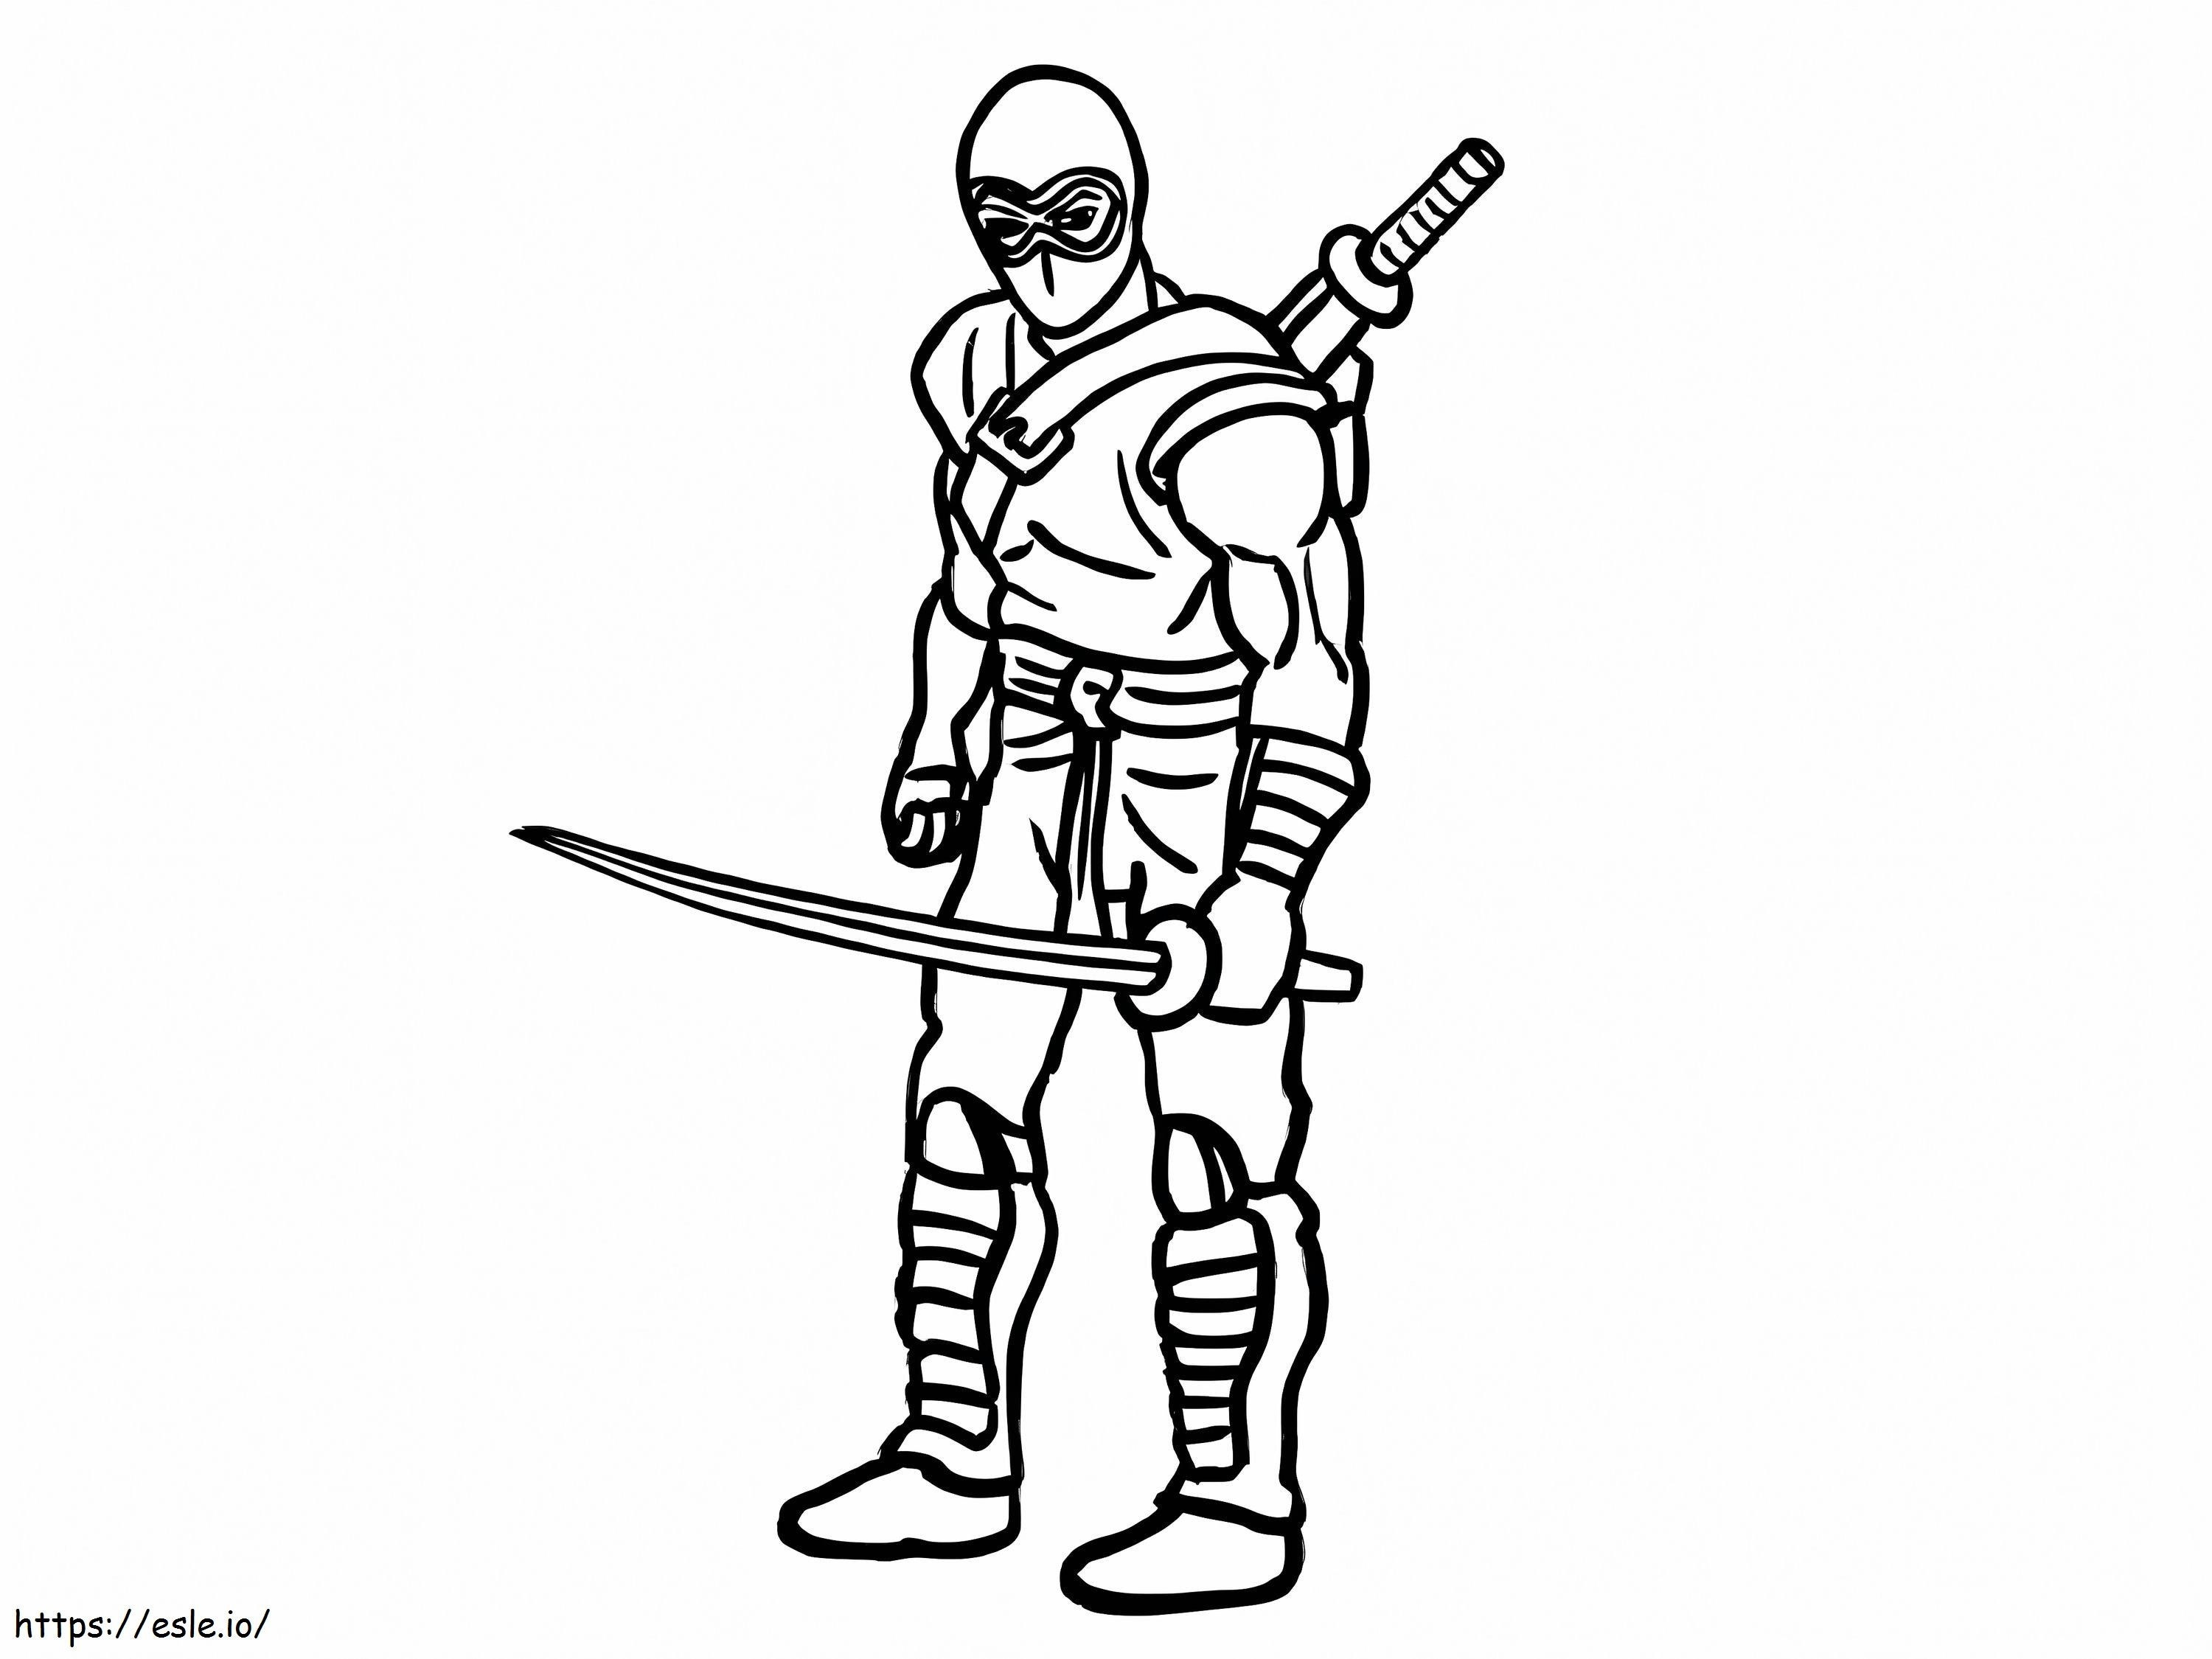 Ninja With Sword coloring page